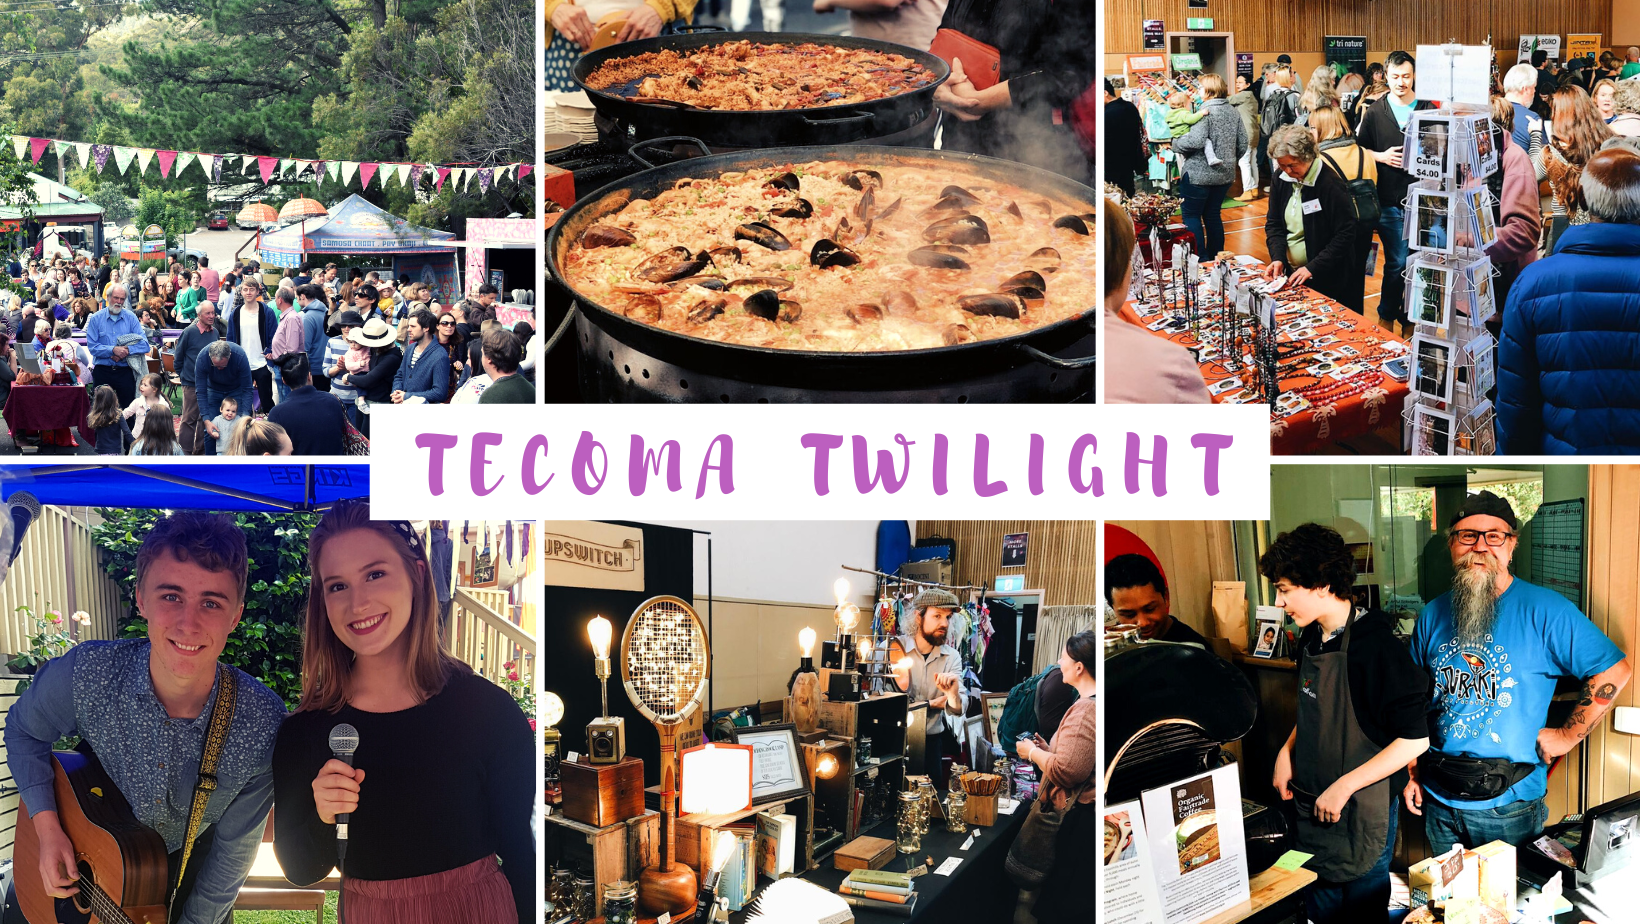 crowds at the tecoma twilight market 2019